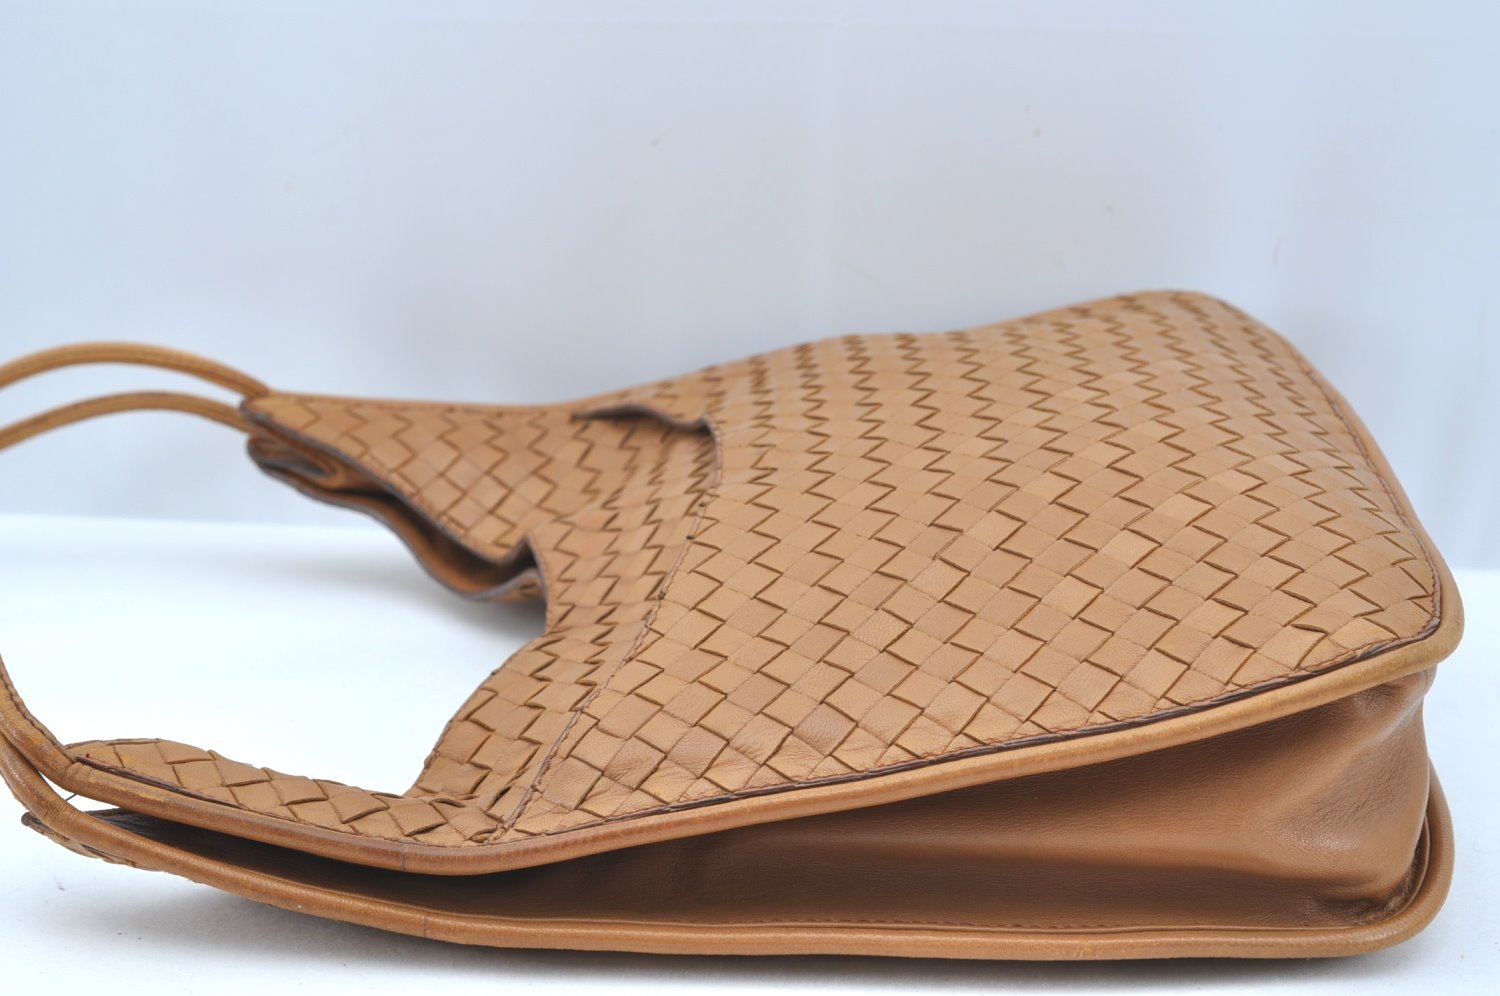 Authentic BOTTEGA VENETA Intrecciato Vintage Leather Shoulder Bag Brown 8394I